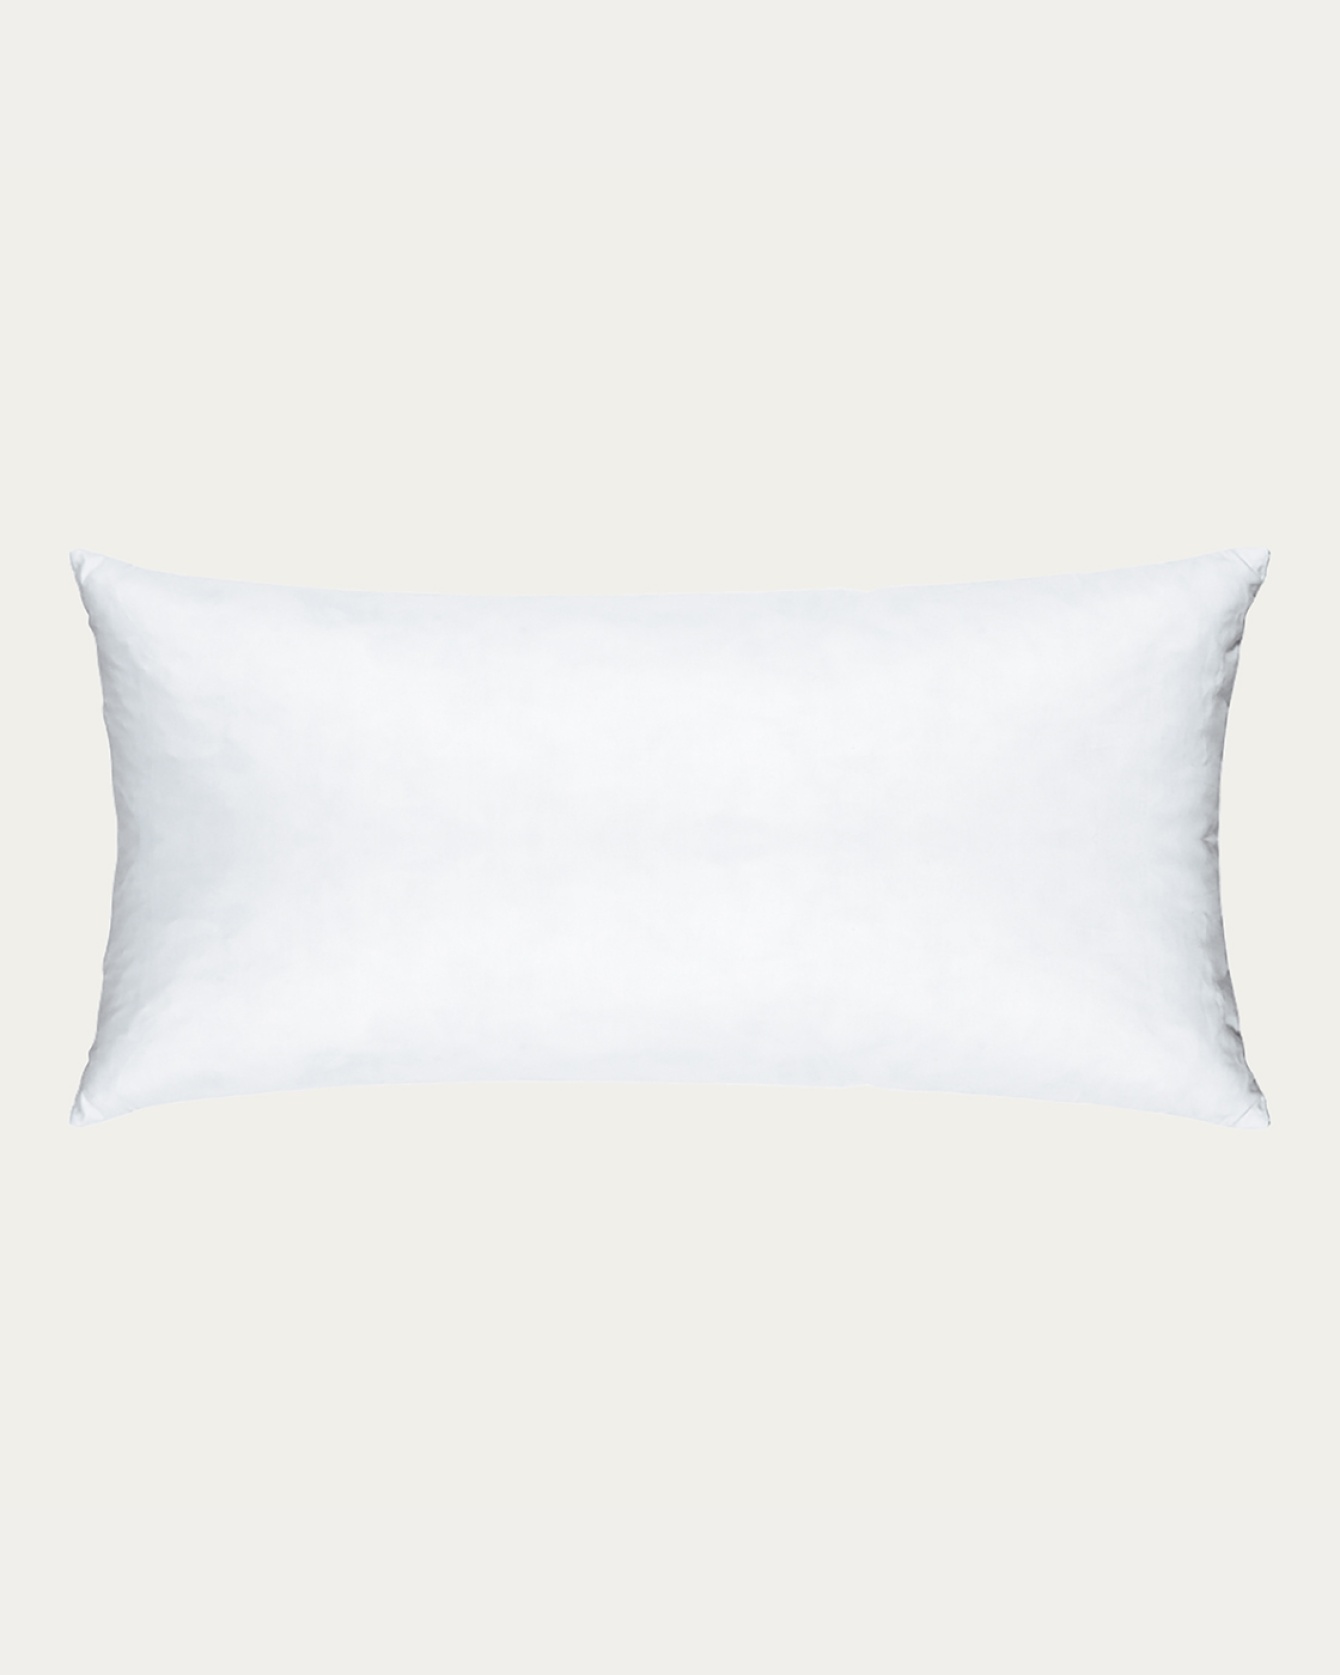 FEATHER Cushion insert 35x70 cm